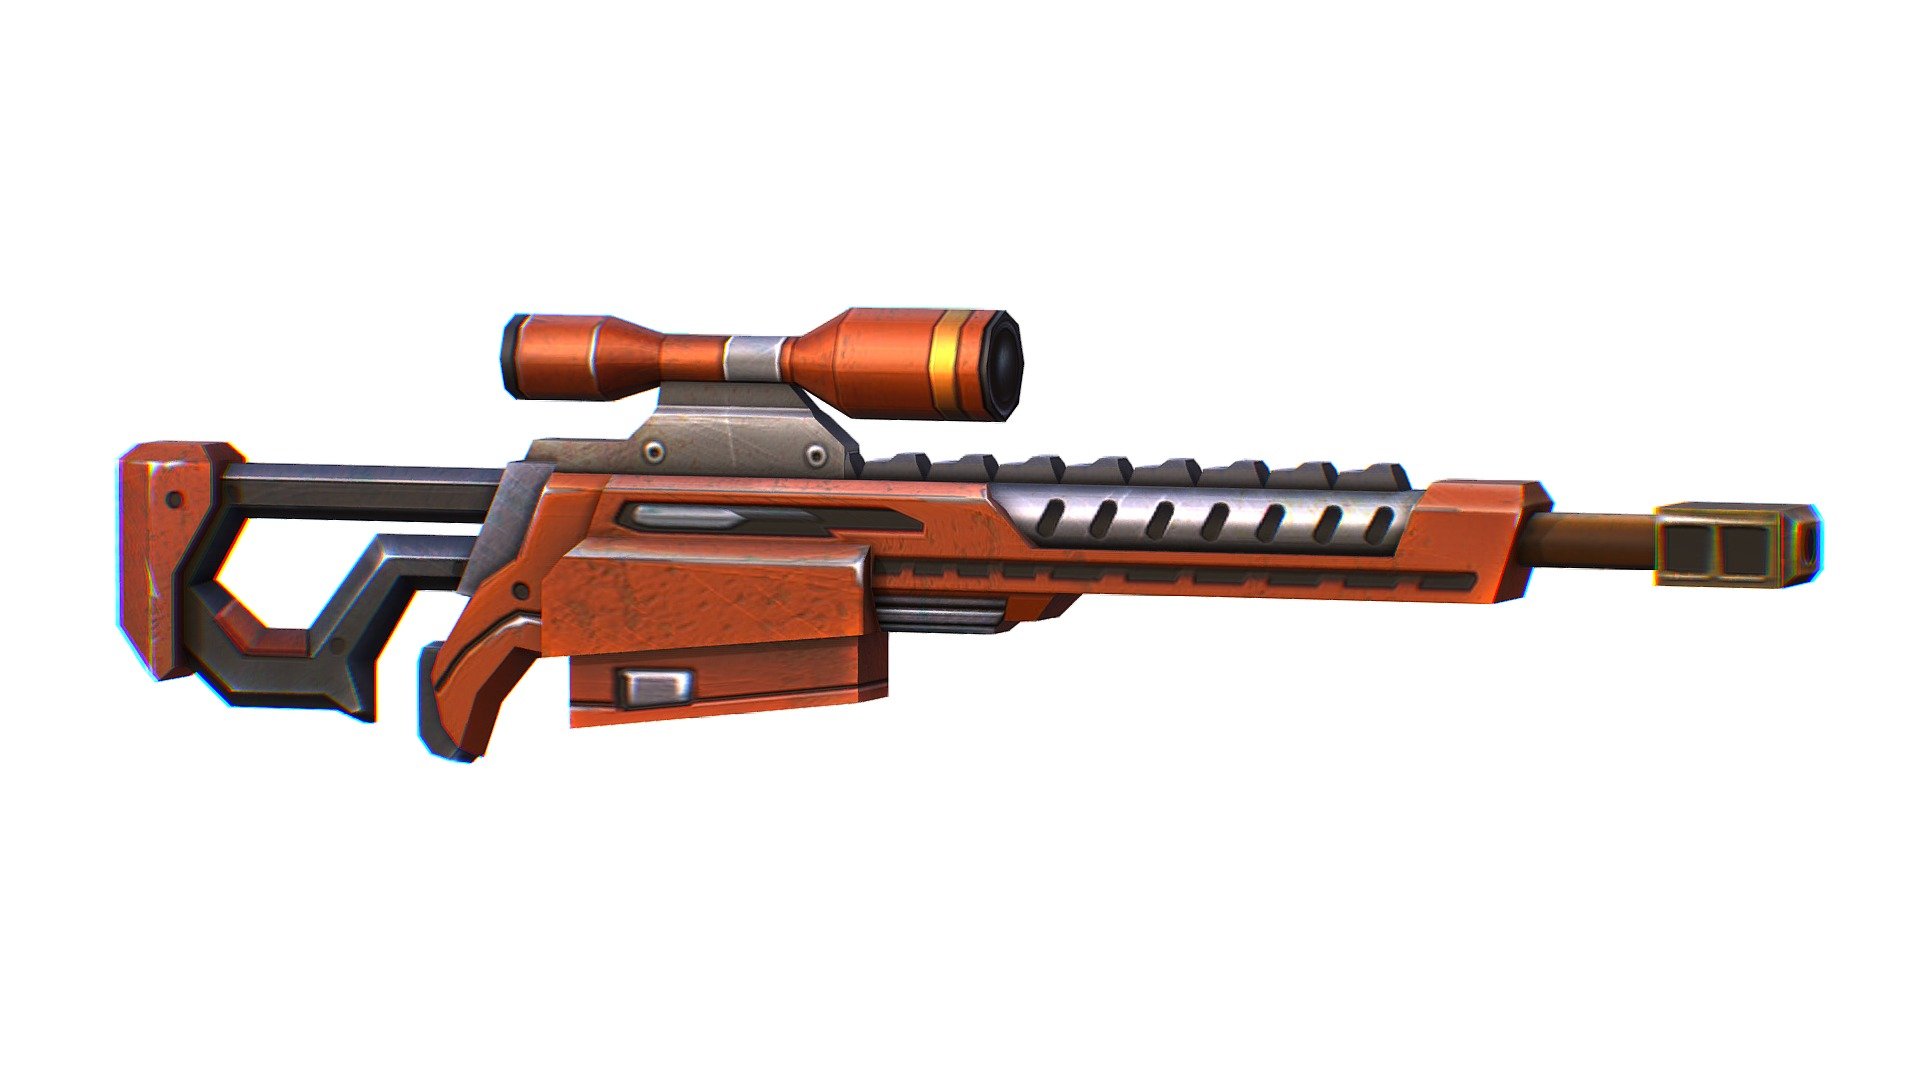 LowPoly Cartoon Sci-Fi Sniper Rifle Future - 3dsMax and Maya file included - LowPoly Cartoon Sci-Fi Sniper Rifle Future - Buy Royalty Free 3D model by Oleg Shuldiakov (@olegshuldiakov) 3d model